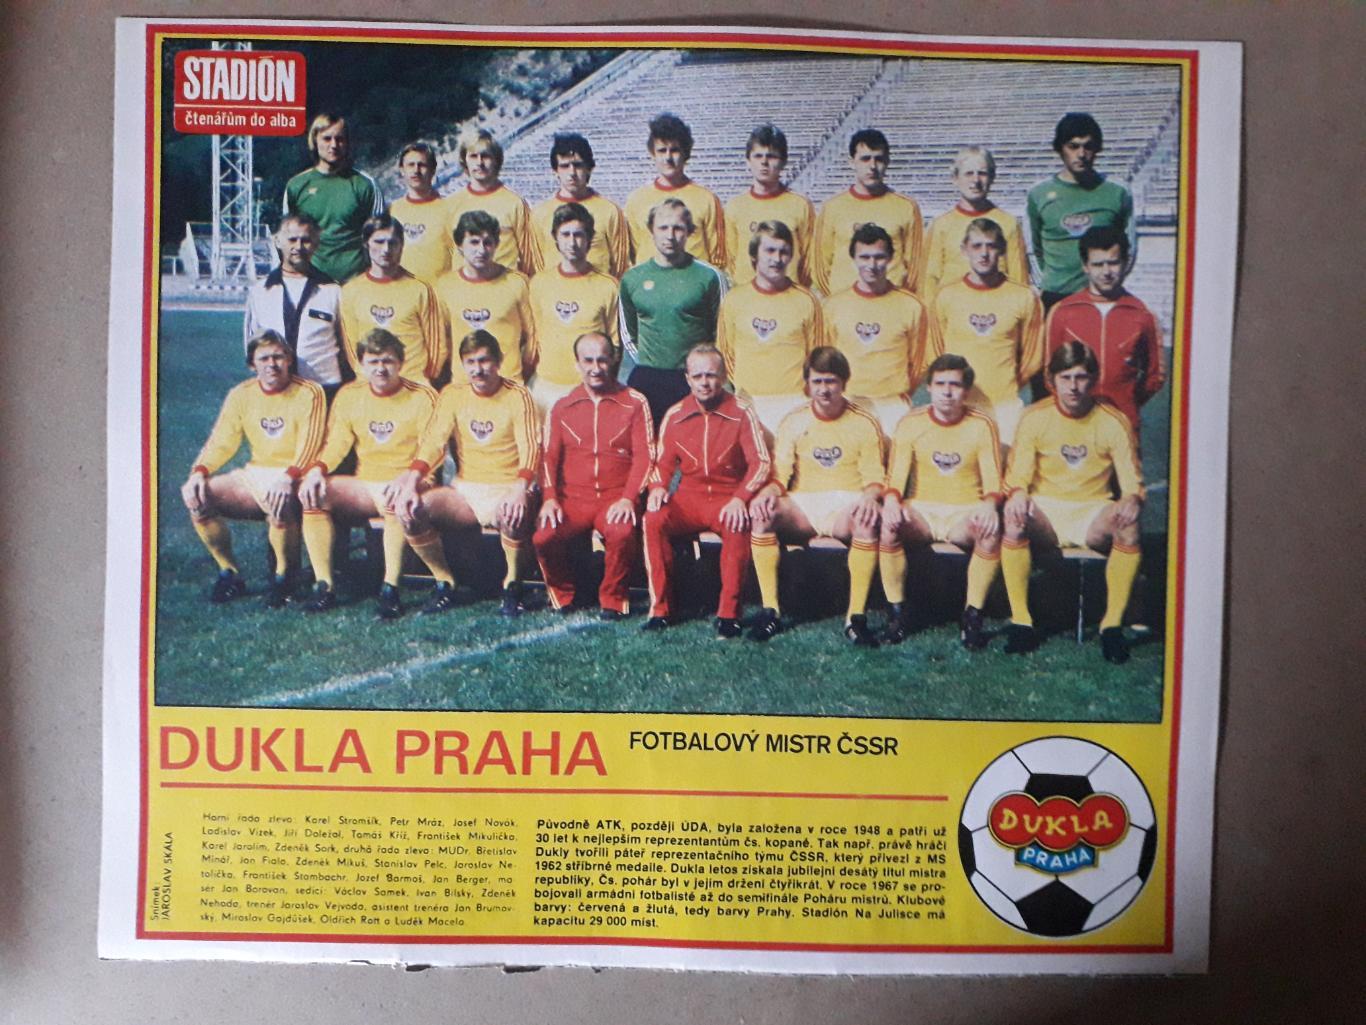 Постер из журнала Stadion- Dukla Praha 3